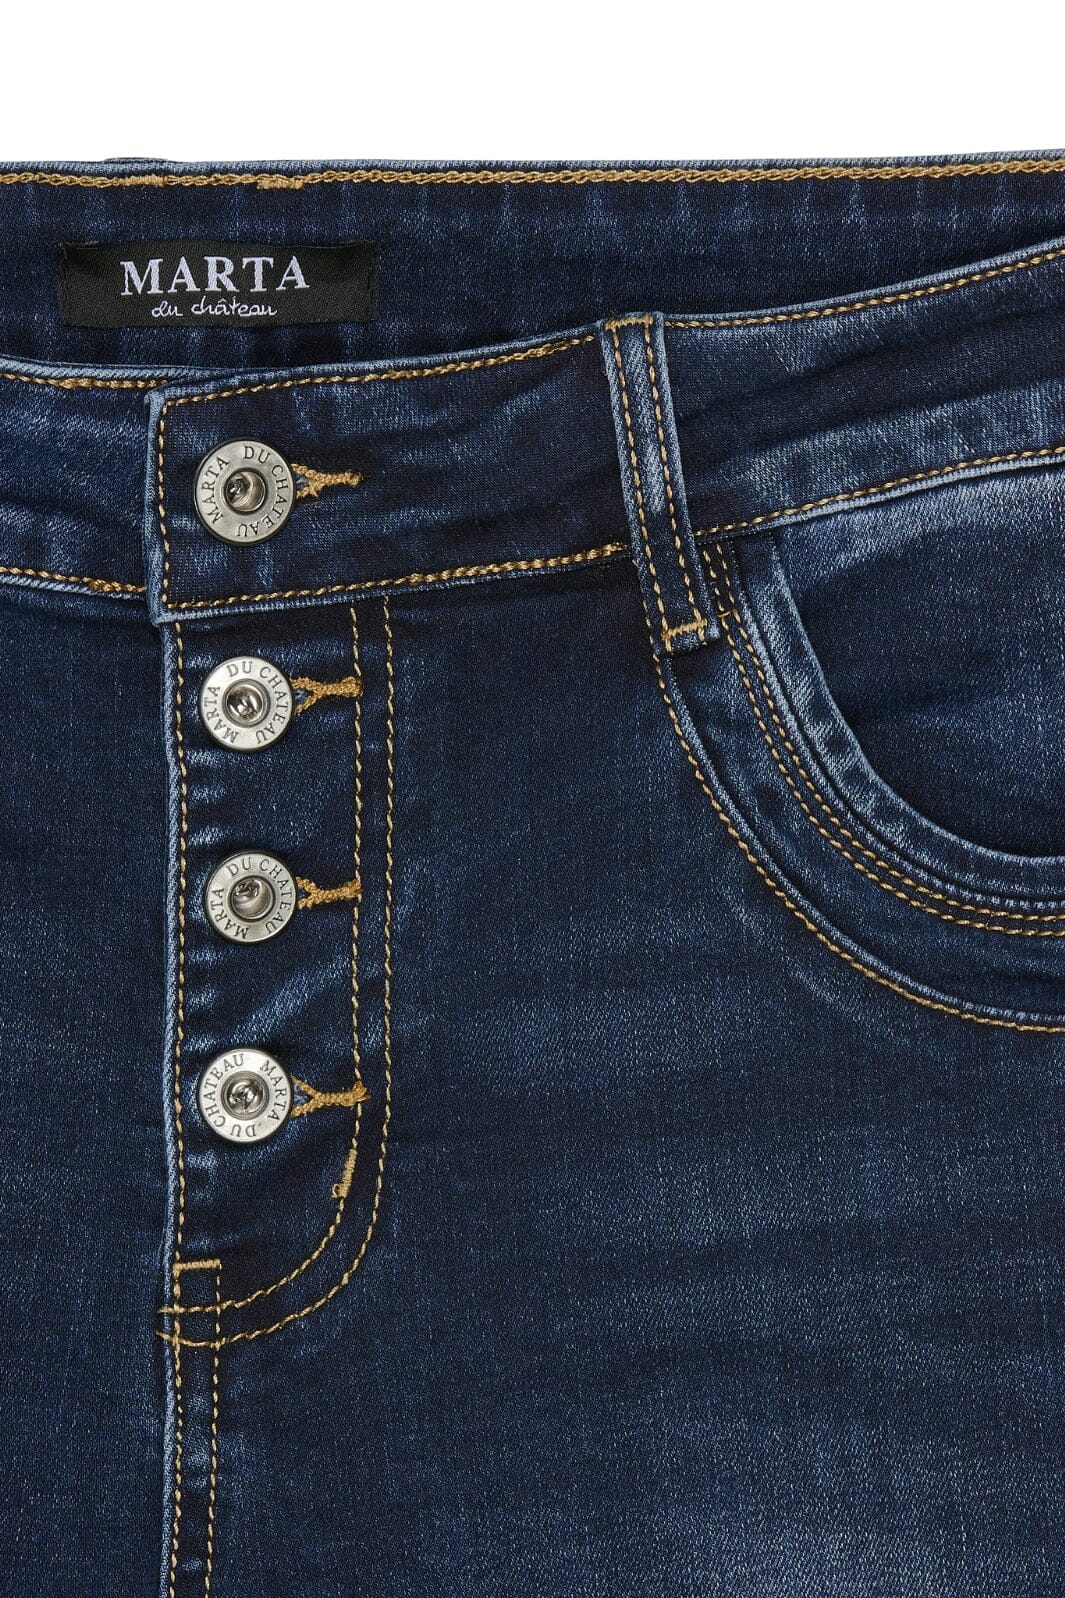 Marta Du Chateau - Sif Jeans - MDC111-2501 Jeans 